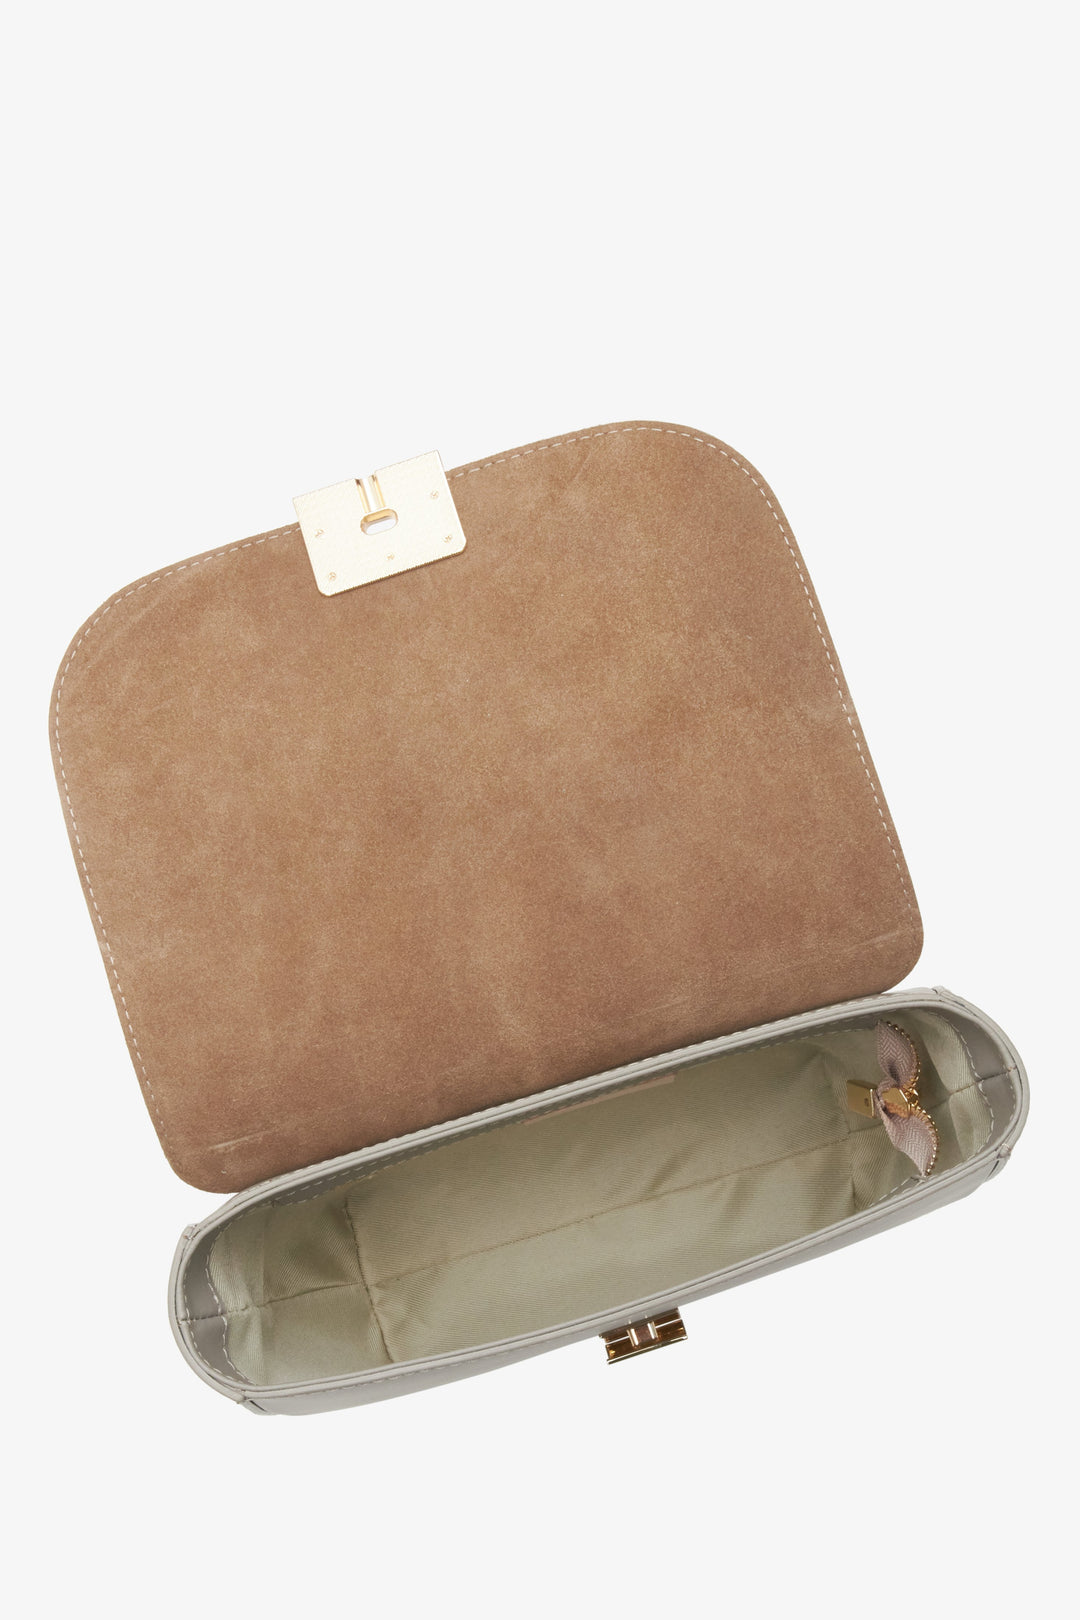 Estro grey crescent-shaped handbag made of Italian genuine leather - close-up on the interior of the model.